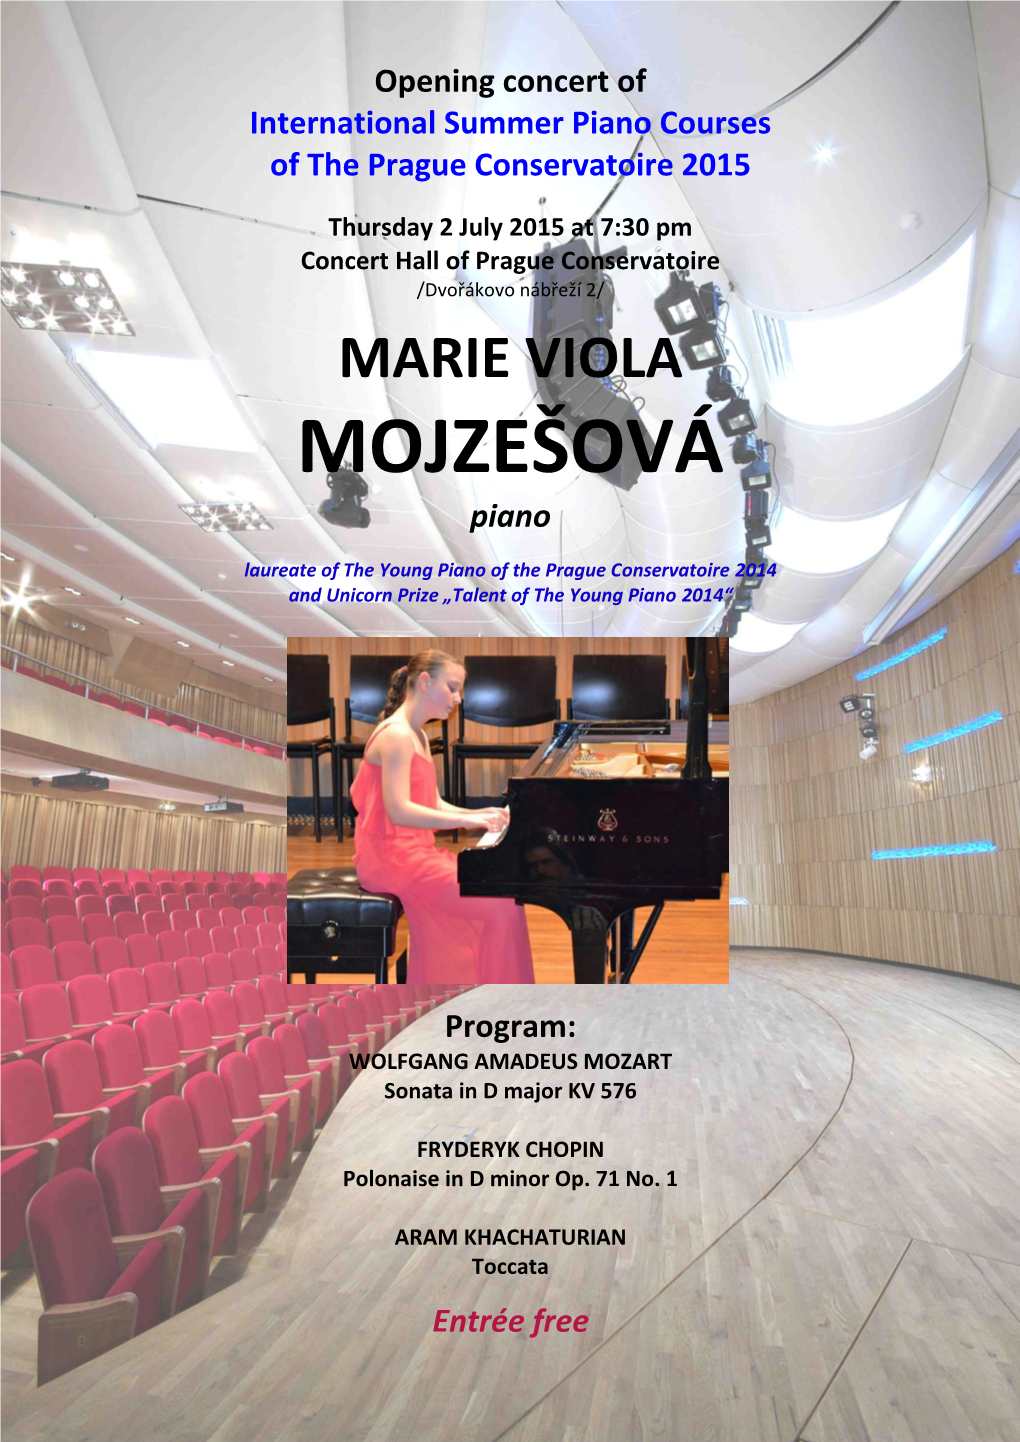 Program of the Concert